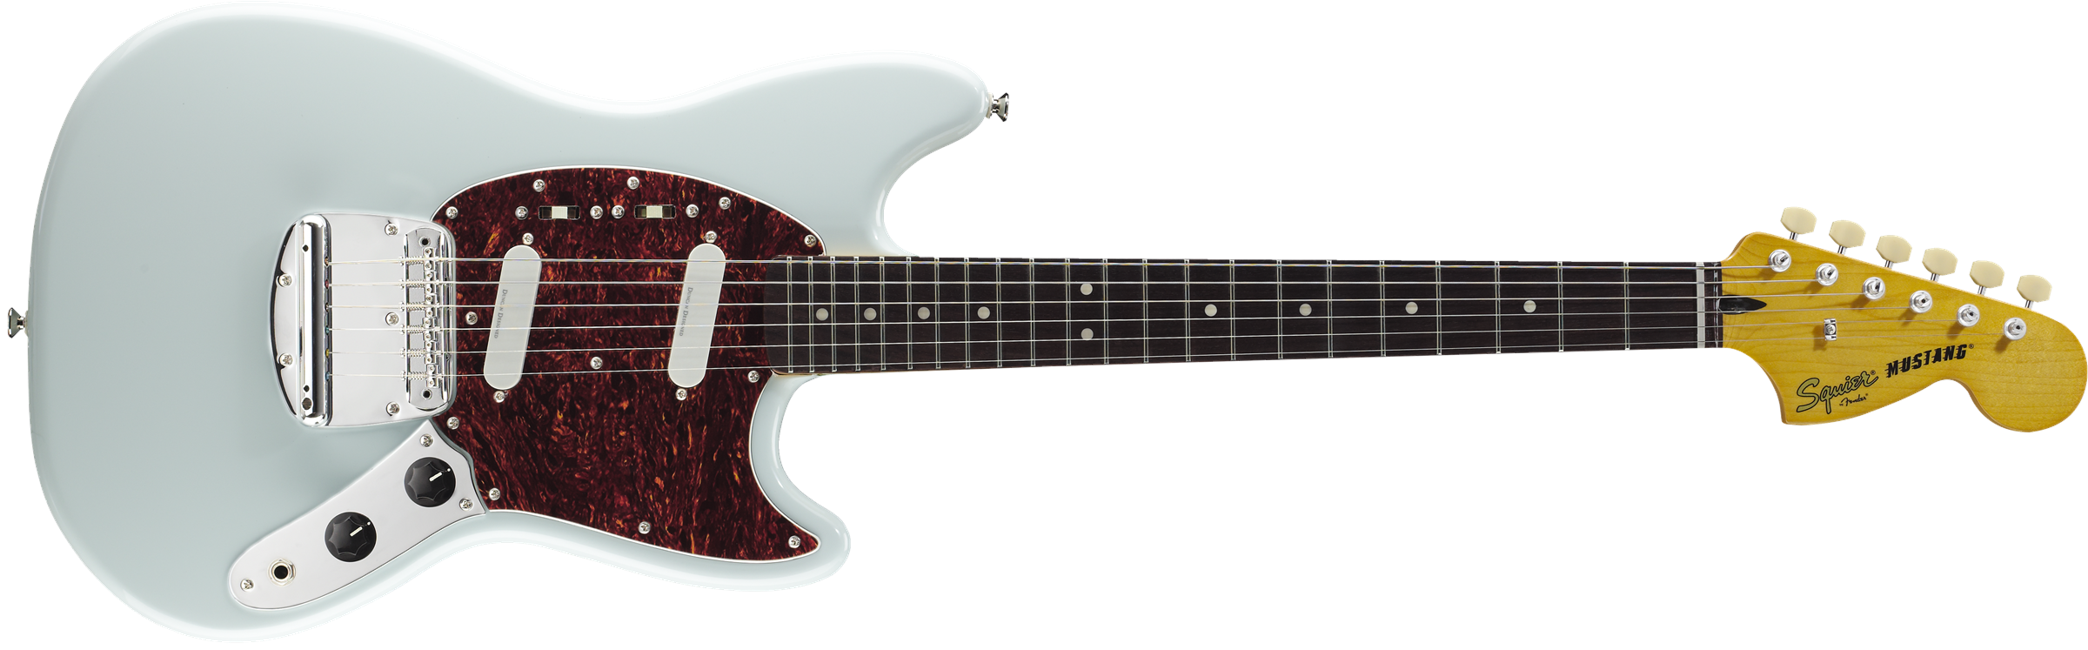 Squier By Fender - Vintage Modified Mustang - Elektrisk Guitar (Sonic Blue)